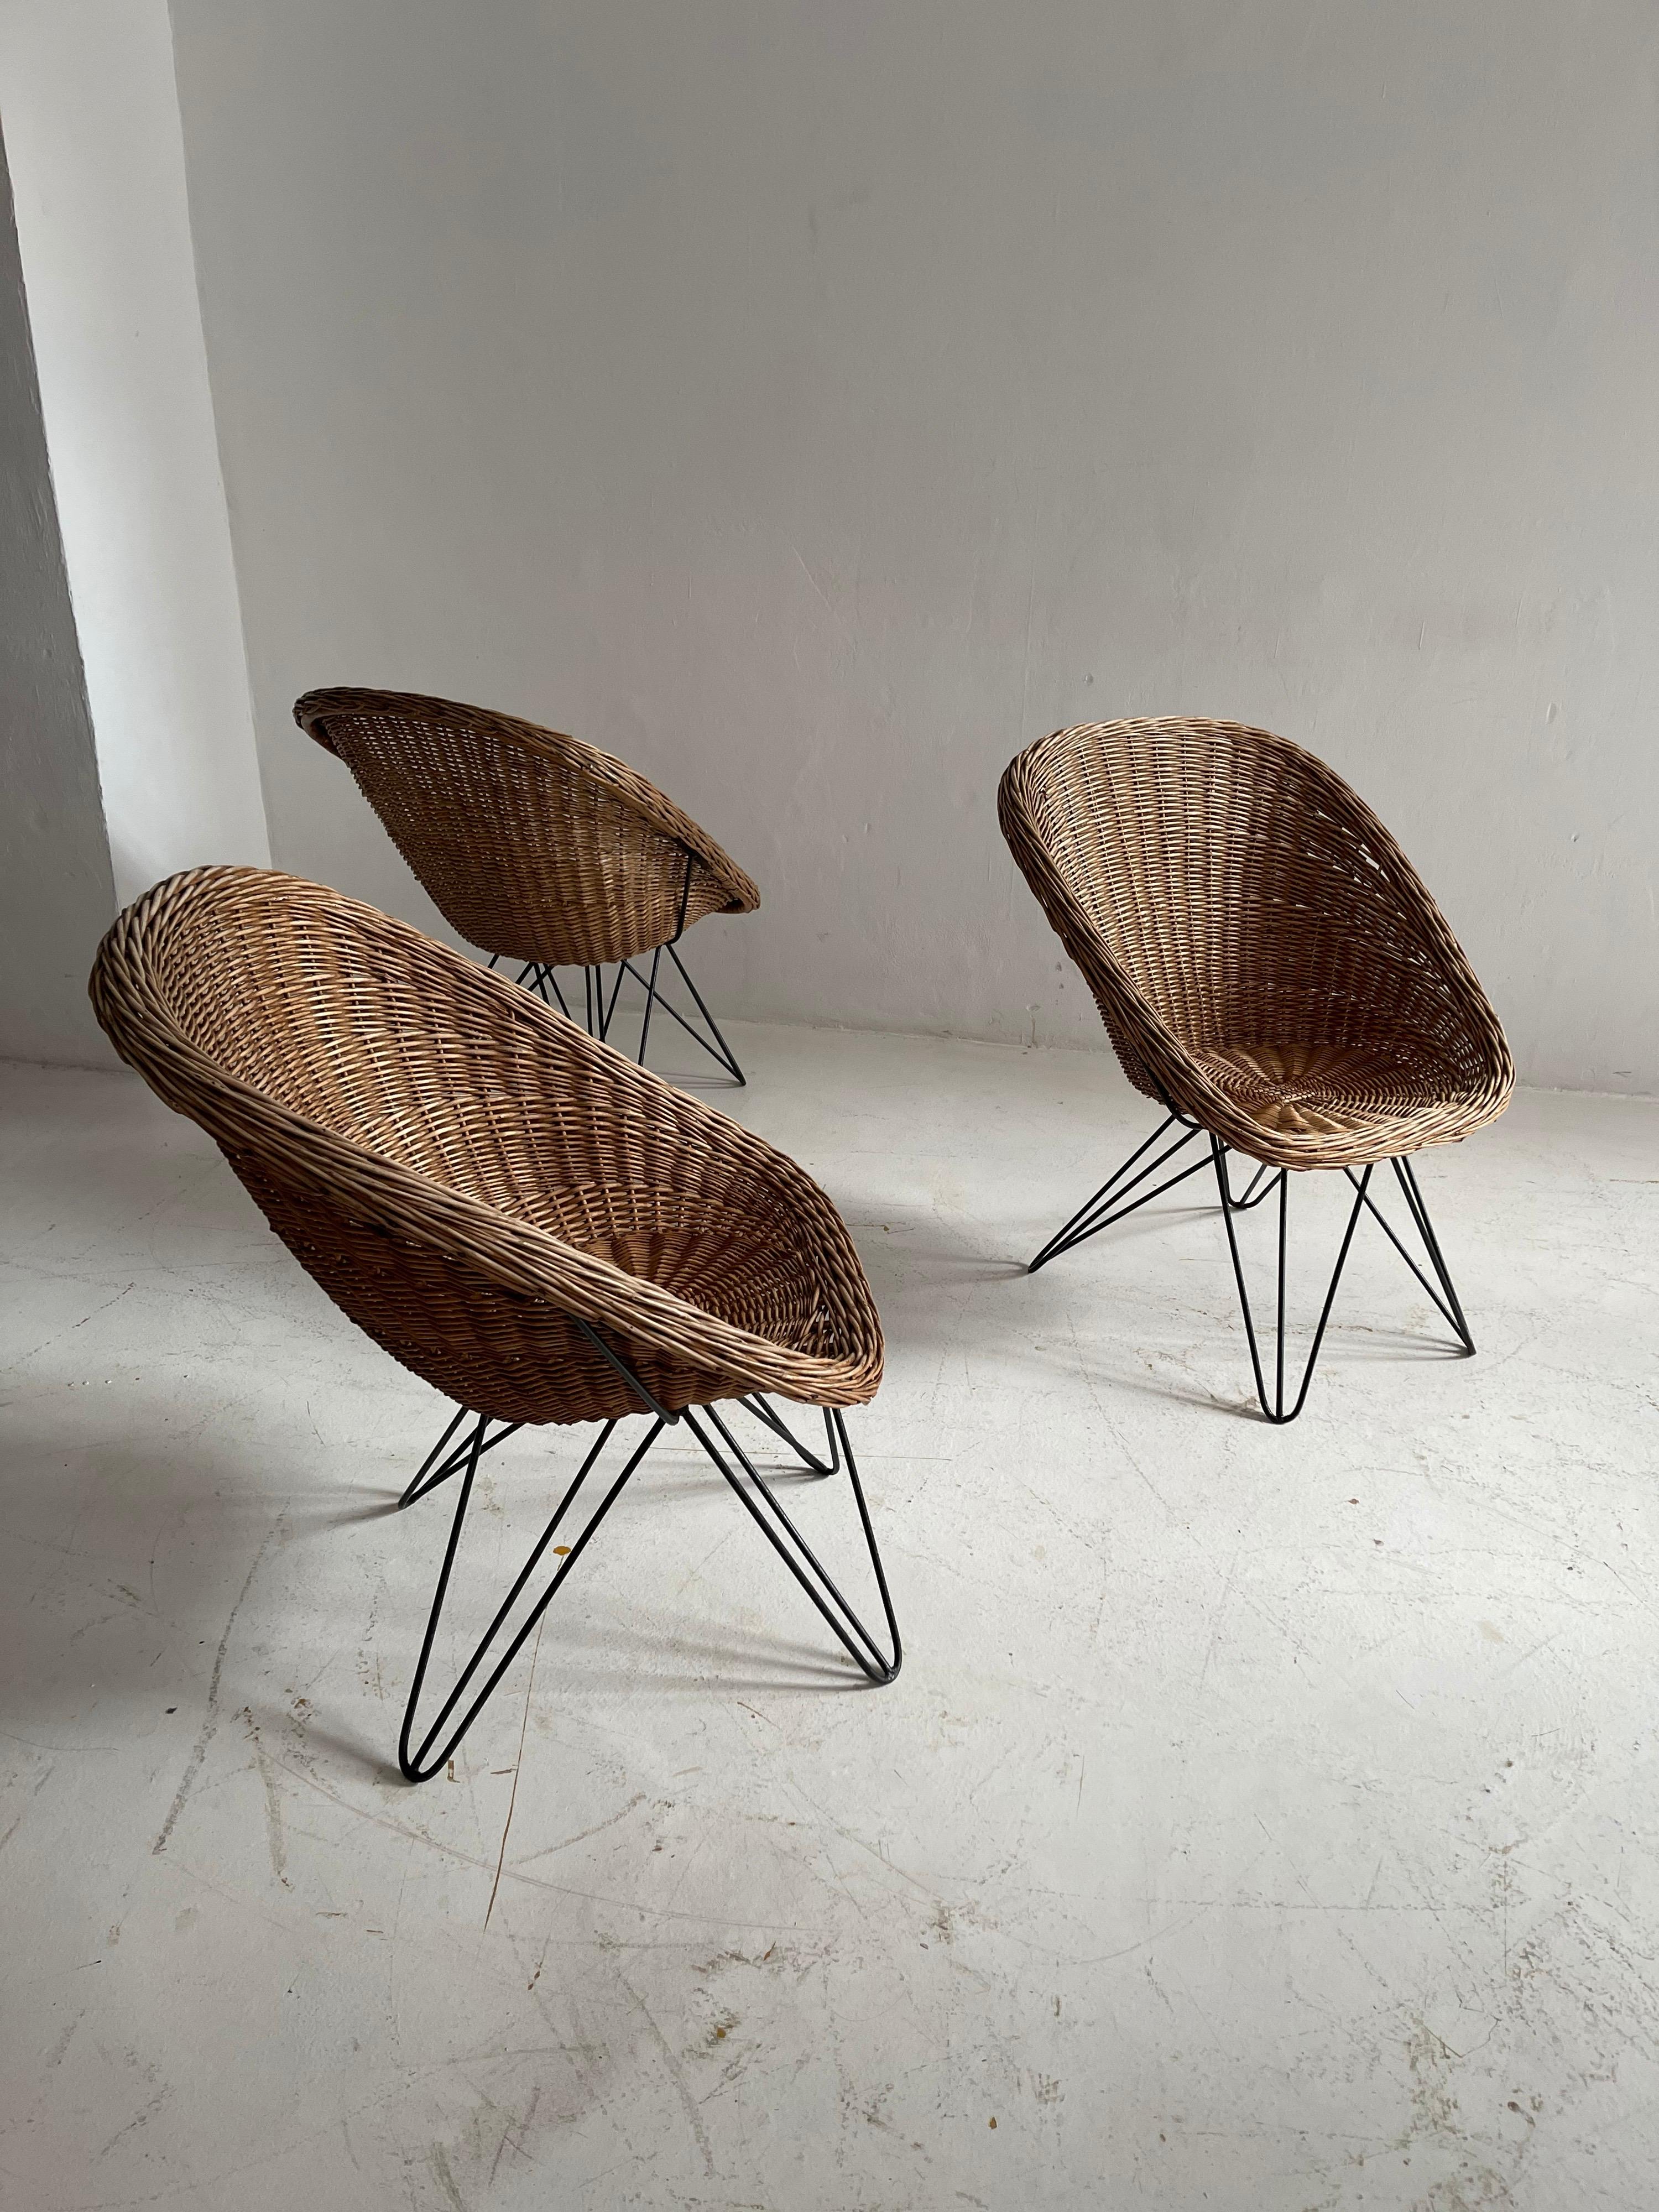 Mid-20th Century Barrel Wicker Lounge Chairs by Sonett, Austria, 1950s For Sale